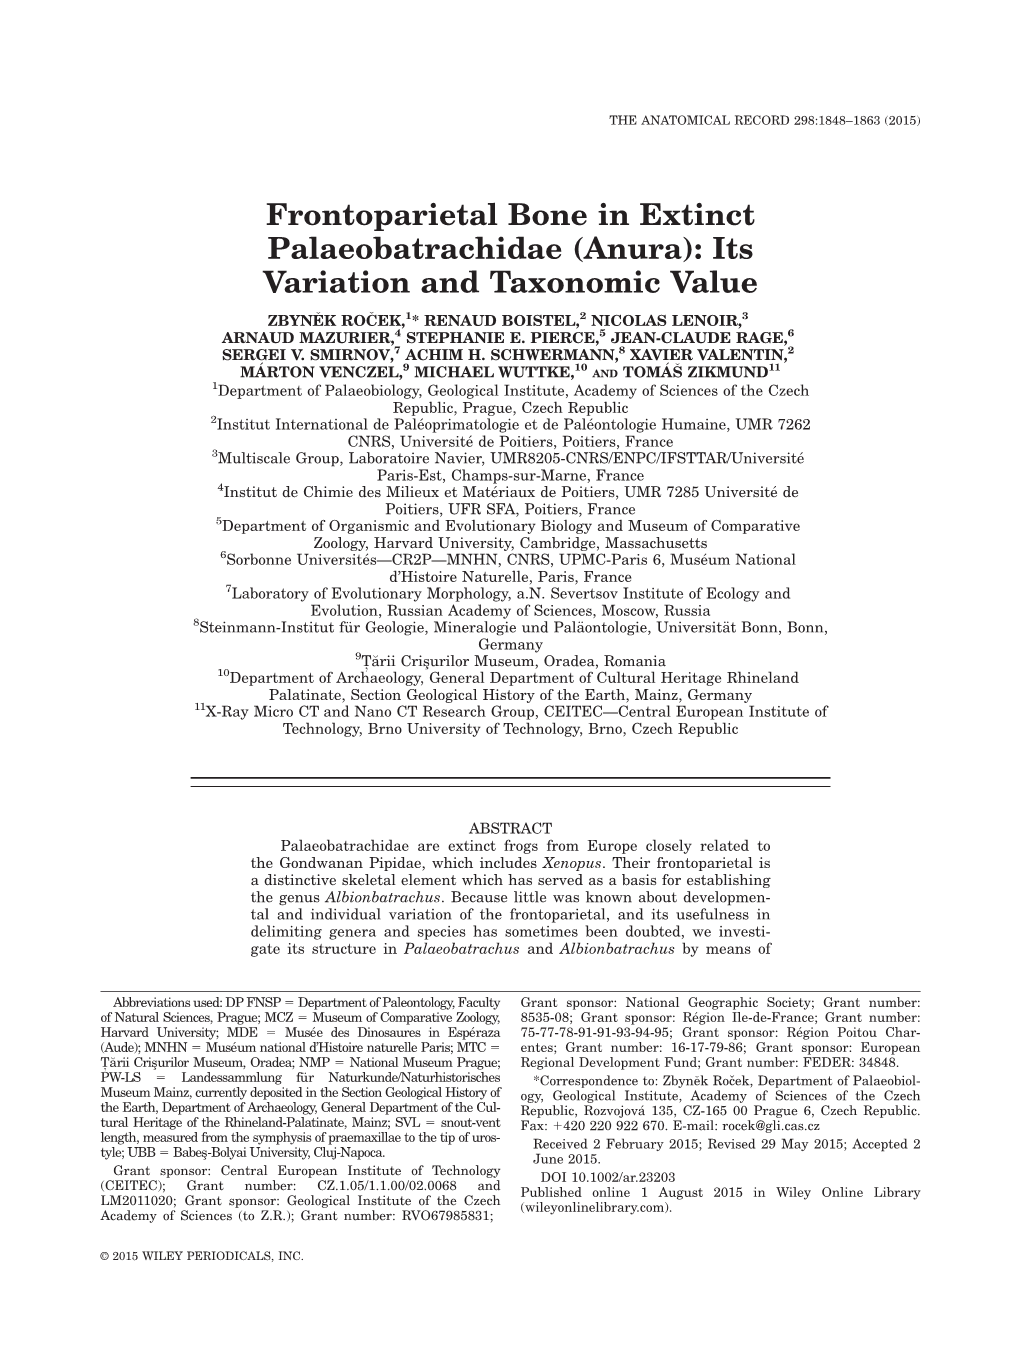 Frontoparietal Bone in Extinct Palaeobatrachidae (Anura): Its Variation and Taxonomic Value